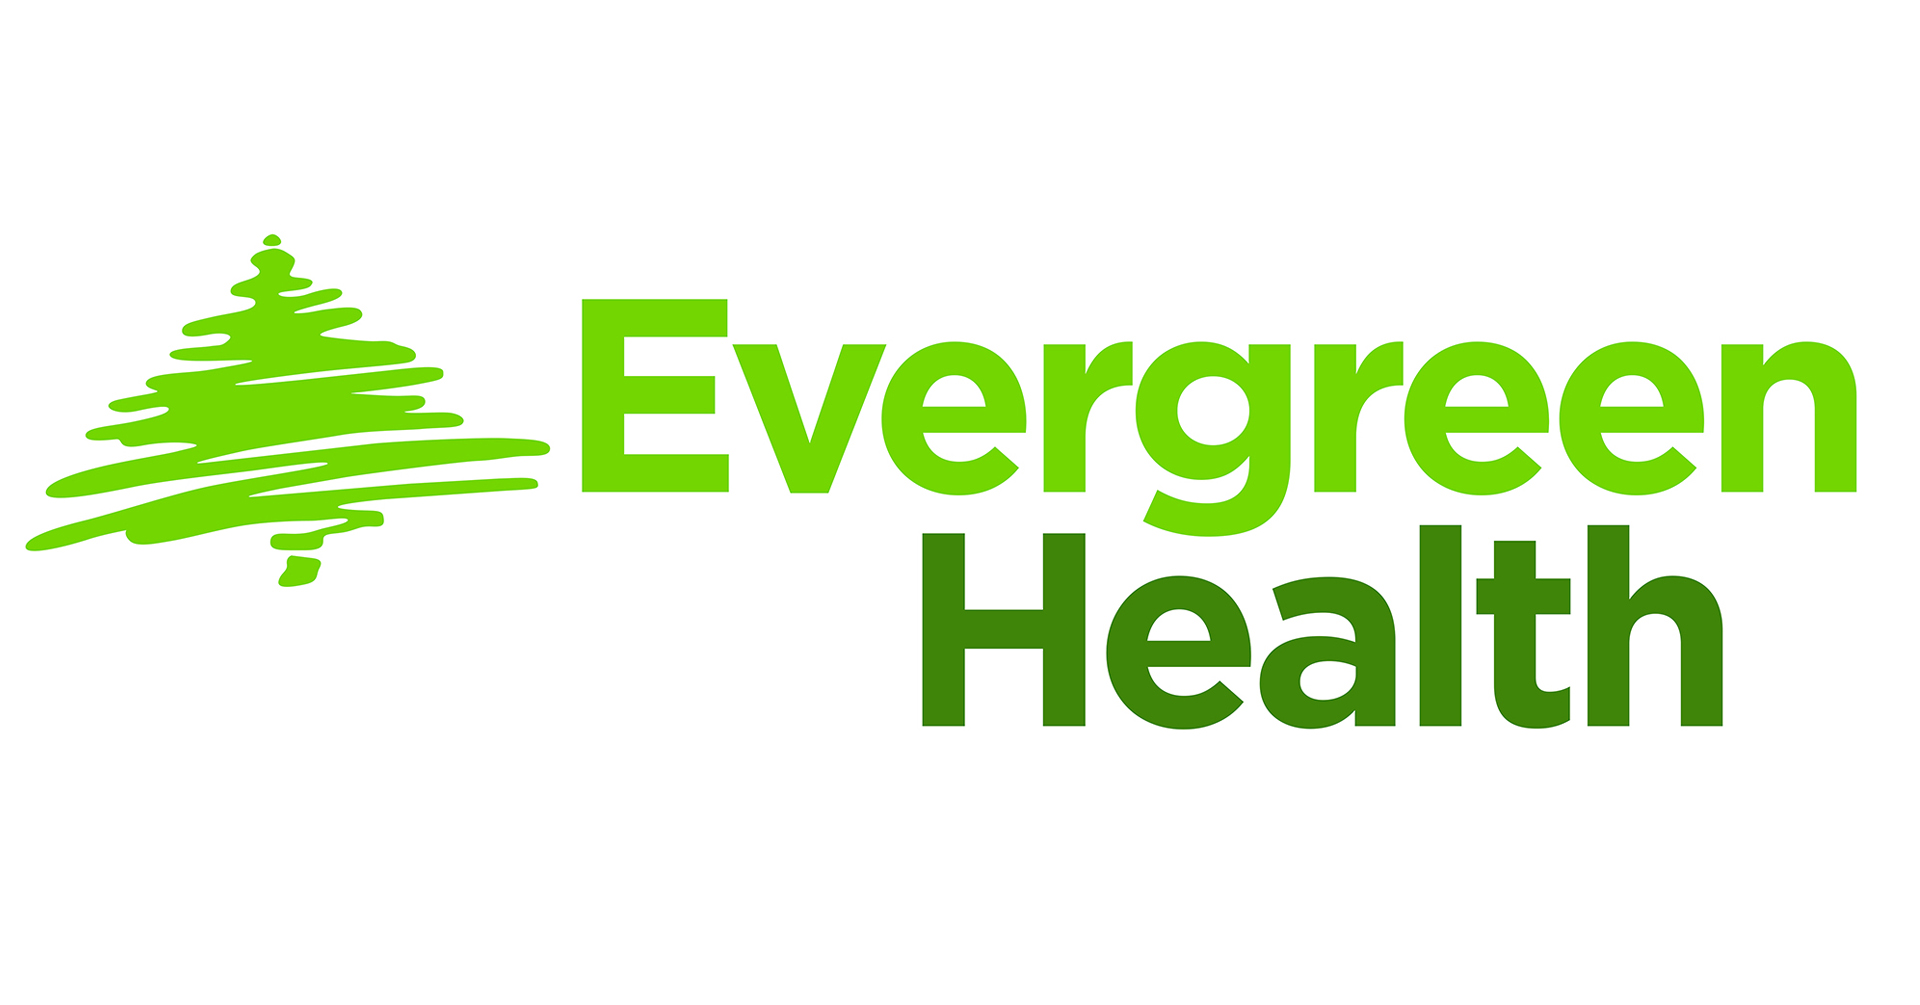  Evergreen Health